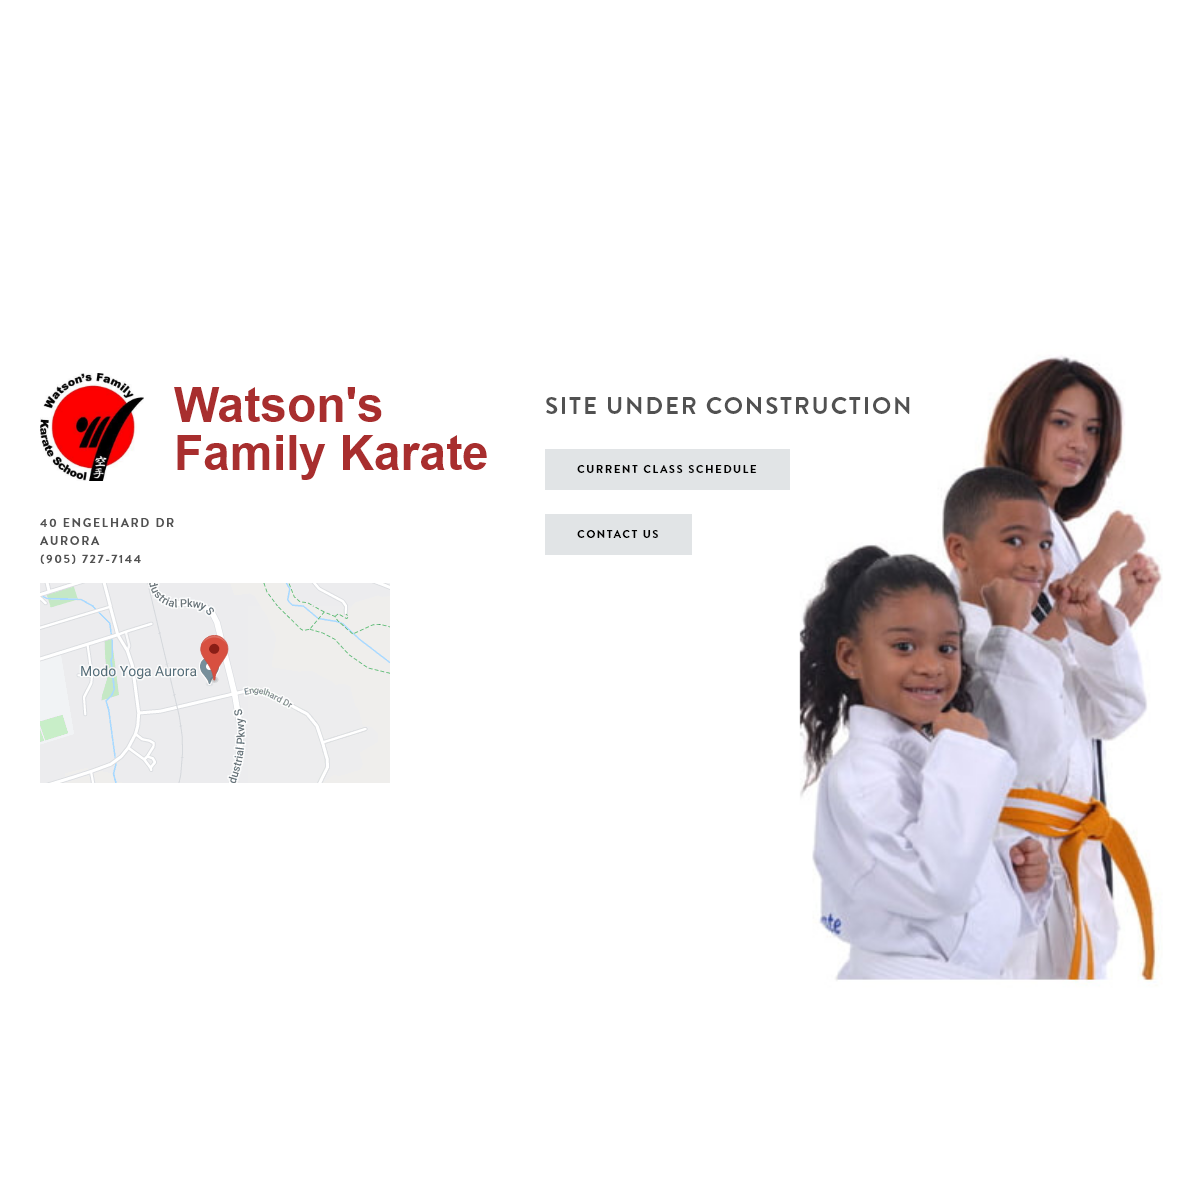 A complete backup of watsonsfamilykarate.com